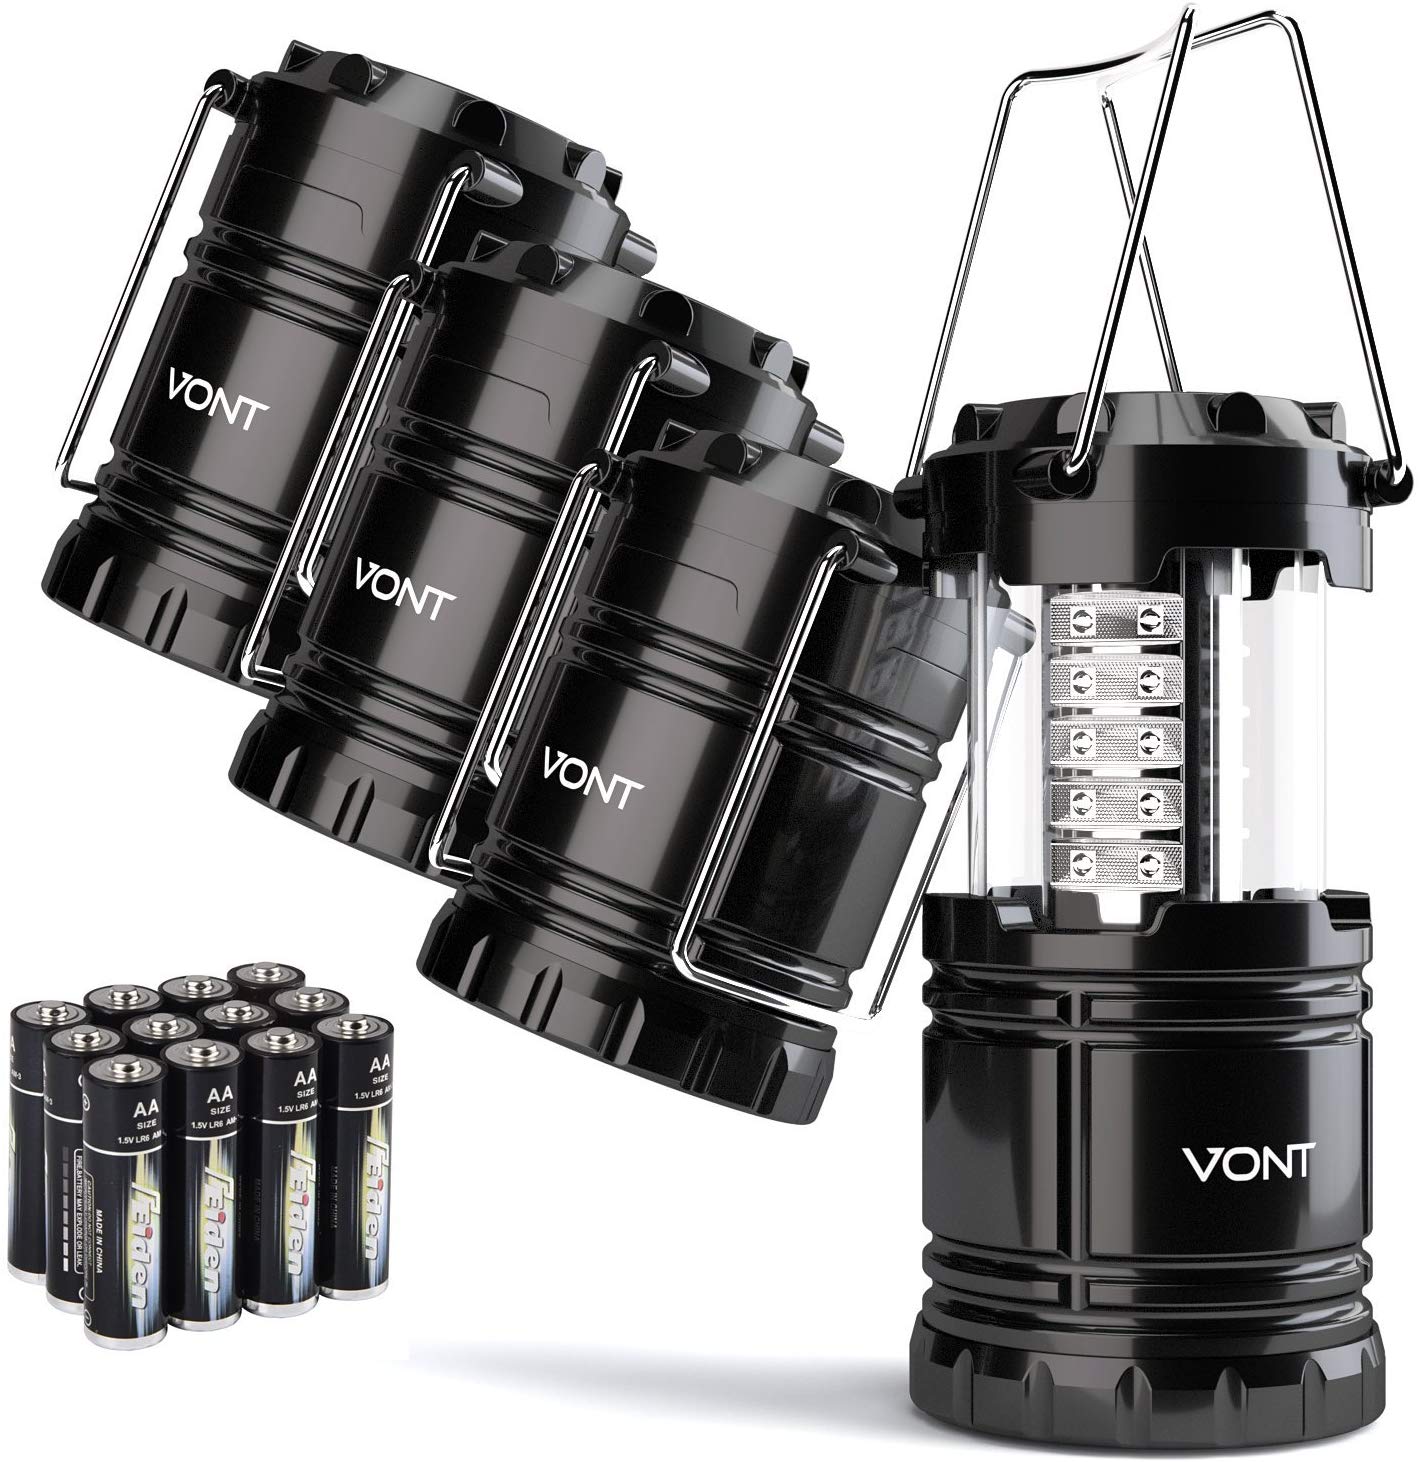 Vont-4-Pack-LED-Camping-Lantern